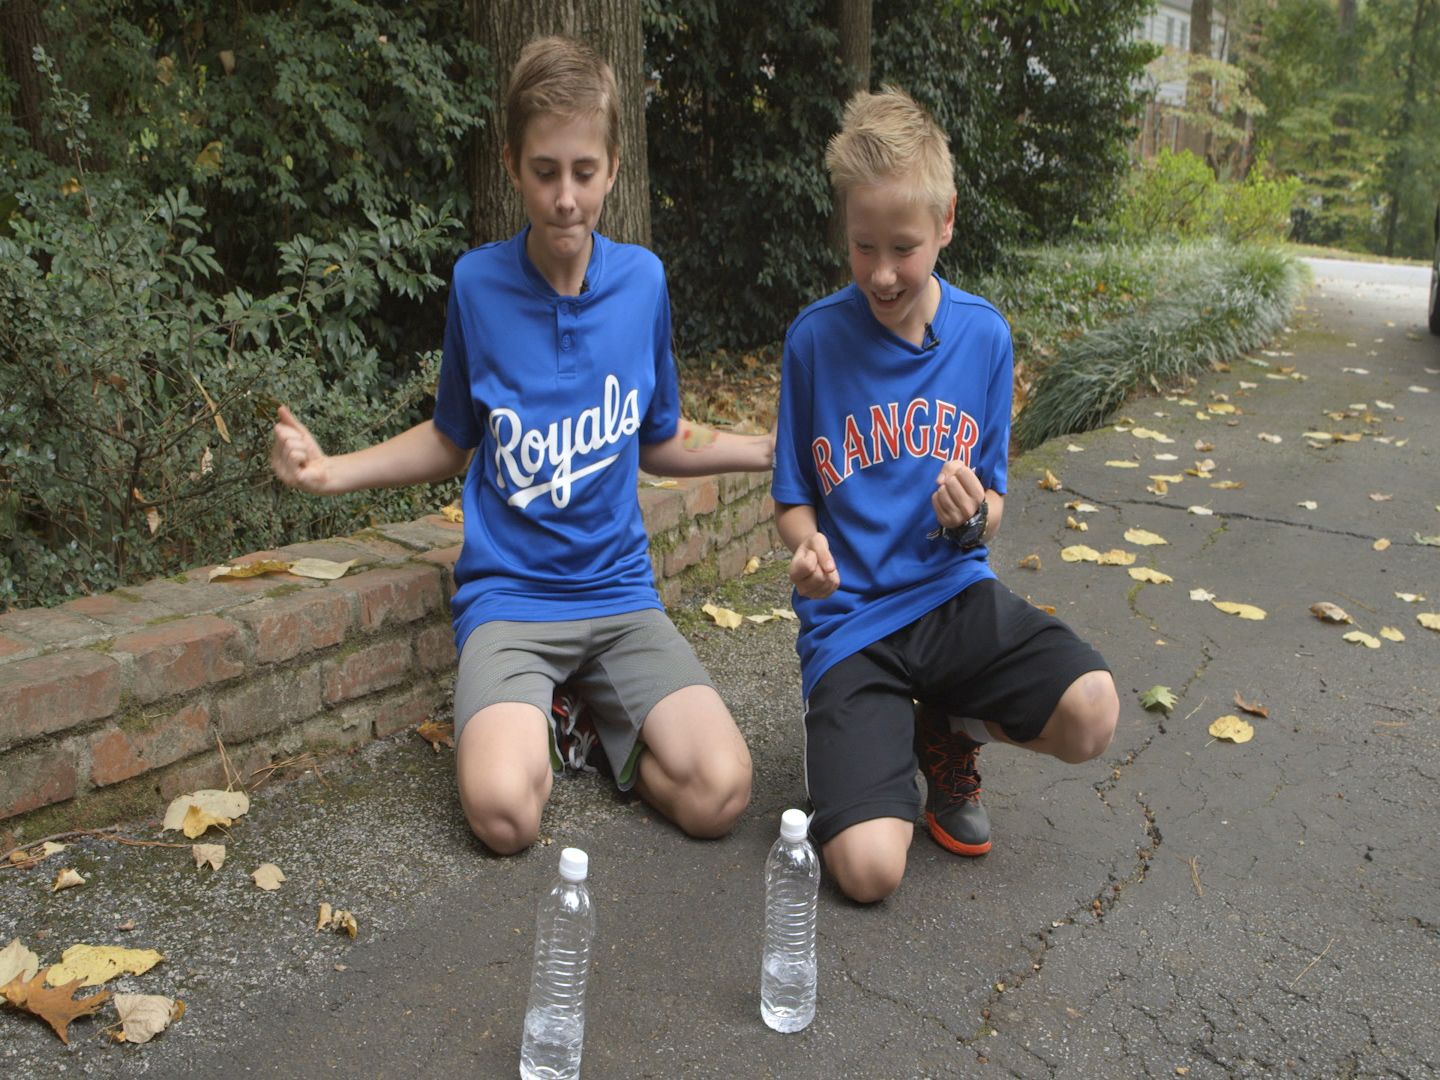 Water Bottle Flipping - Bottle Flip Challenge Drives Parents Crazy